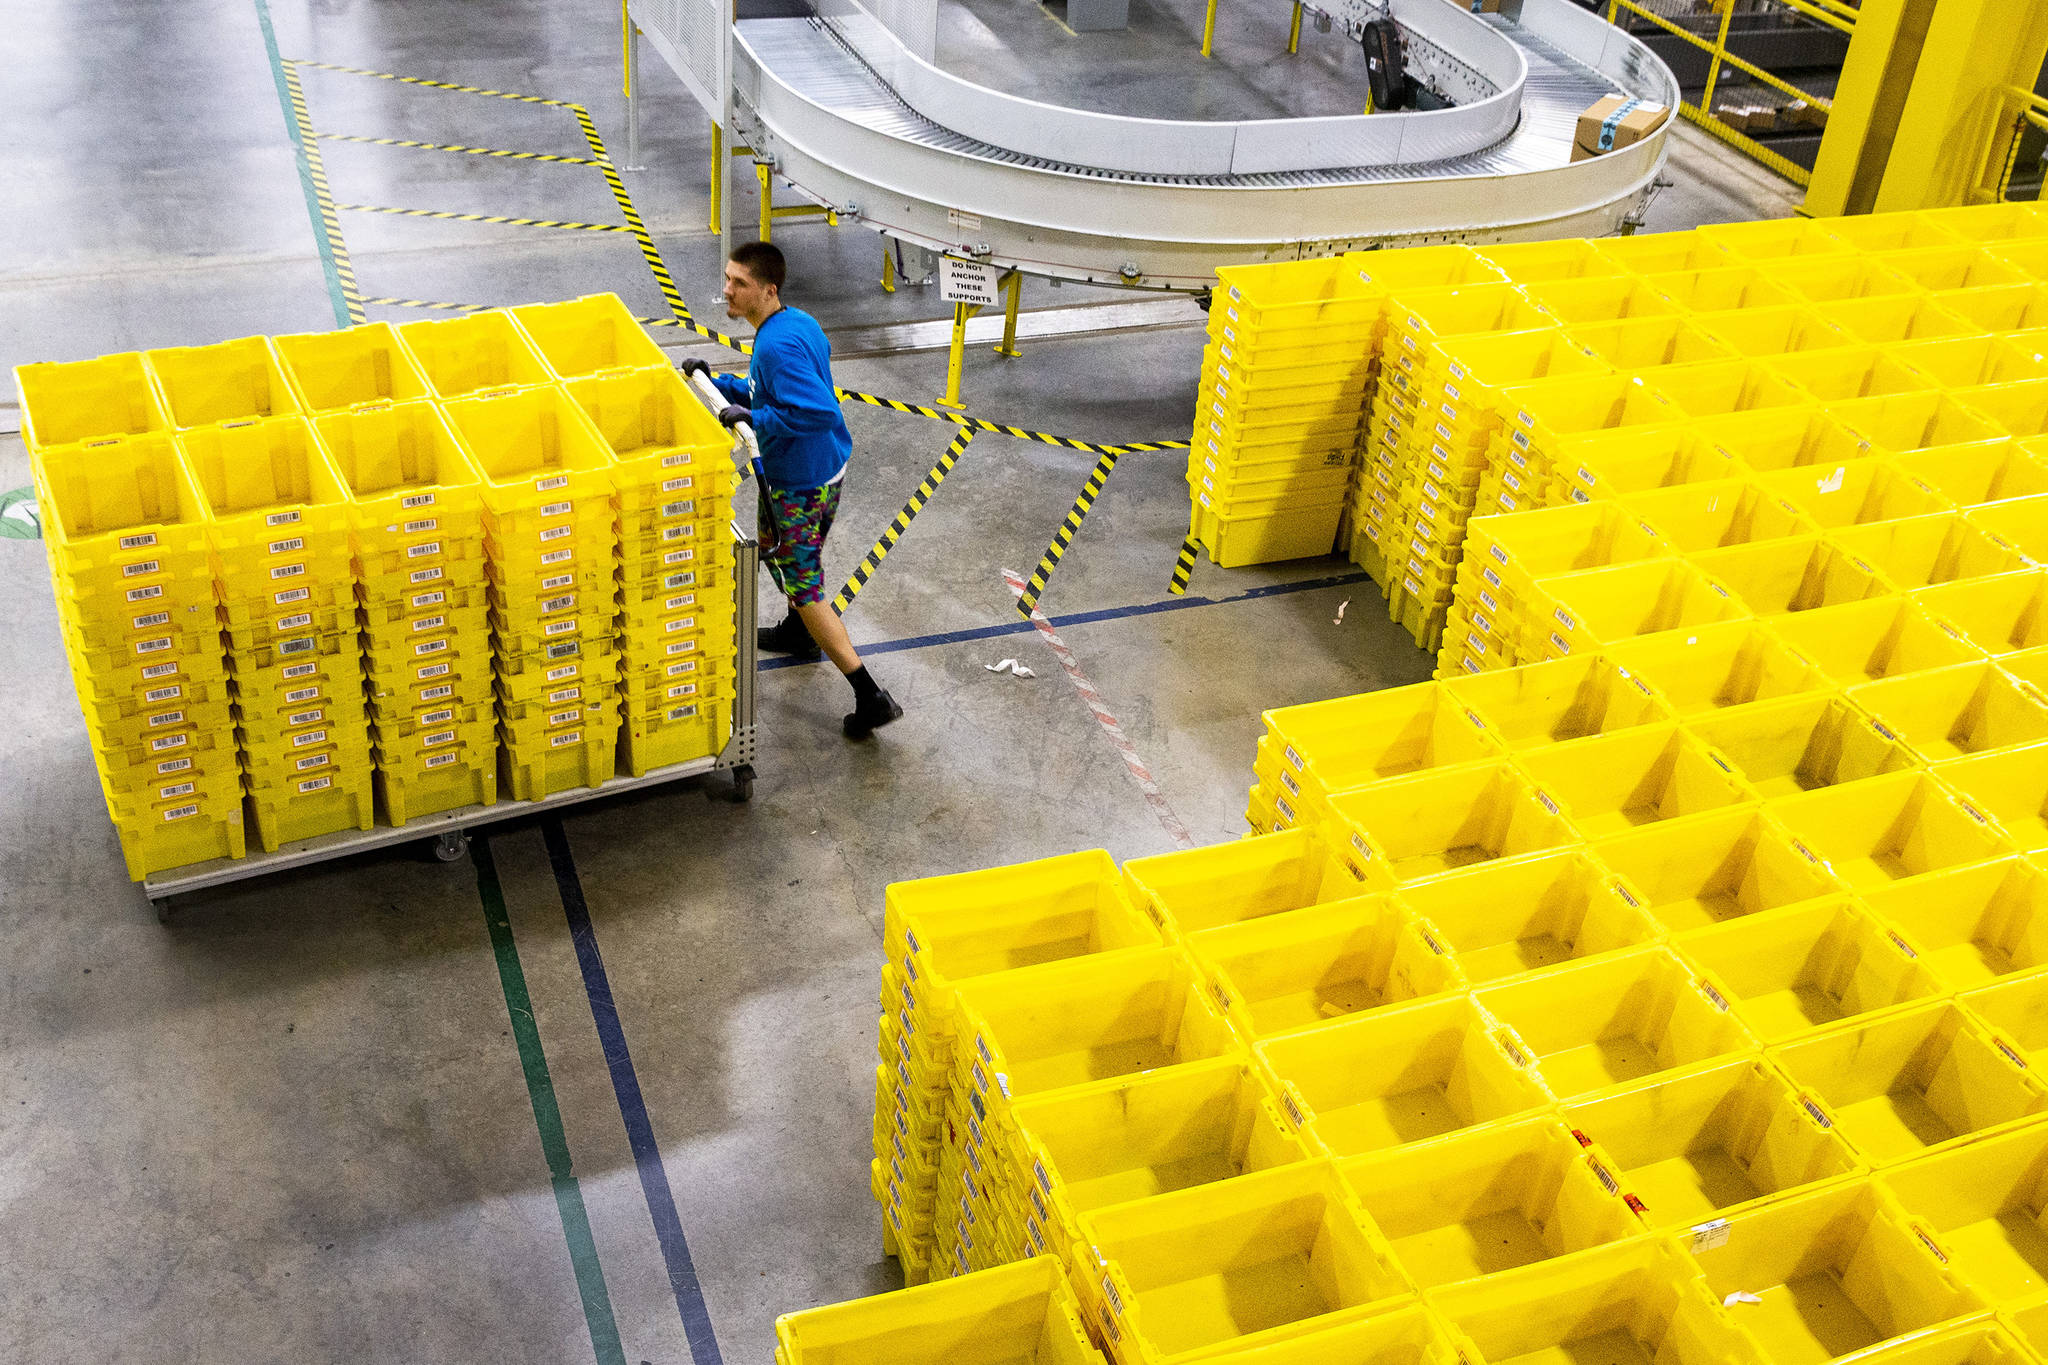 An employee organizes crates at an Amazon fulfillment center in Grapevine, Texas, on December 5, 2018. (Shaban Athuman/Dallas Morning News/TNS)